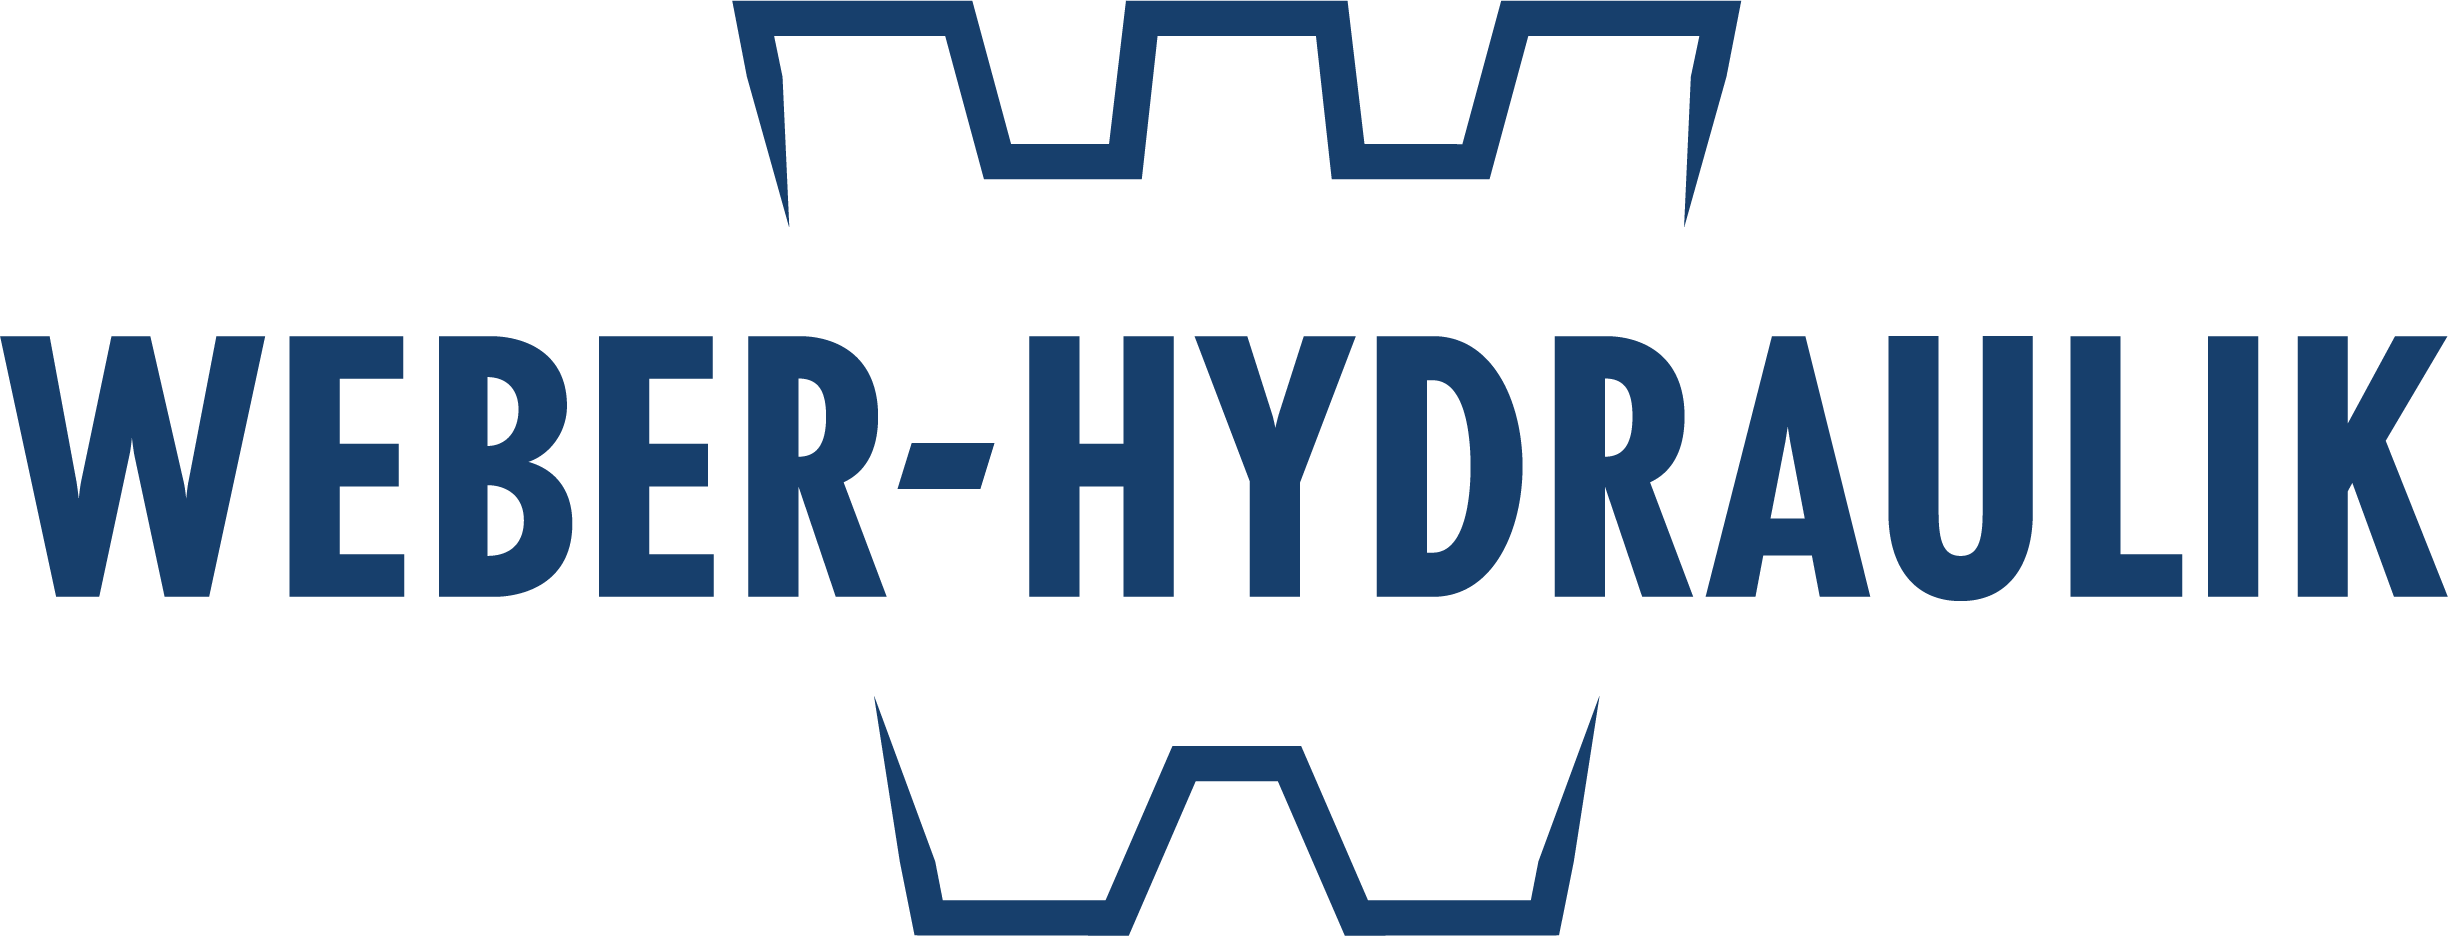 WEBER-HYDRAULIK_logo